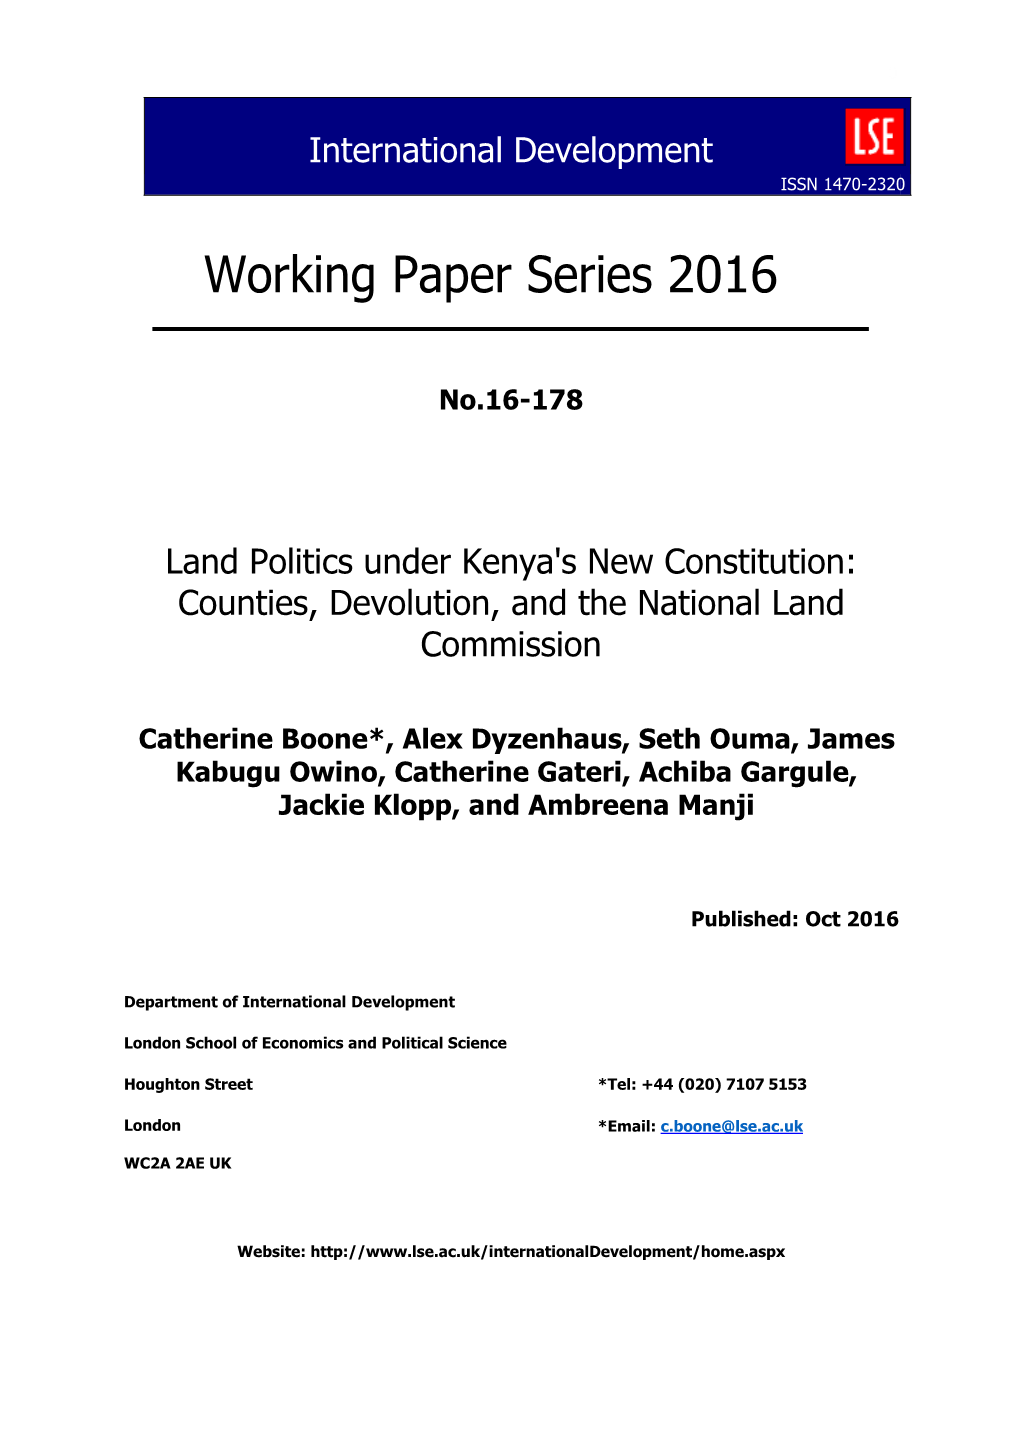 Working Paper Series 2016